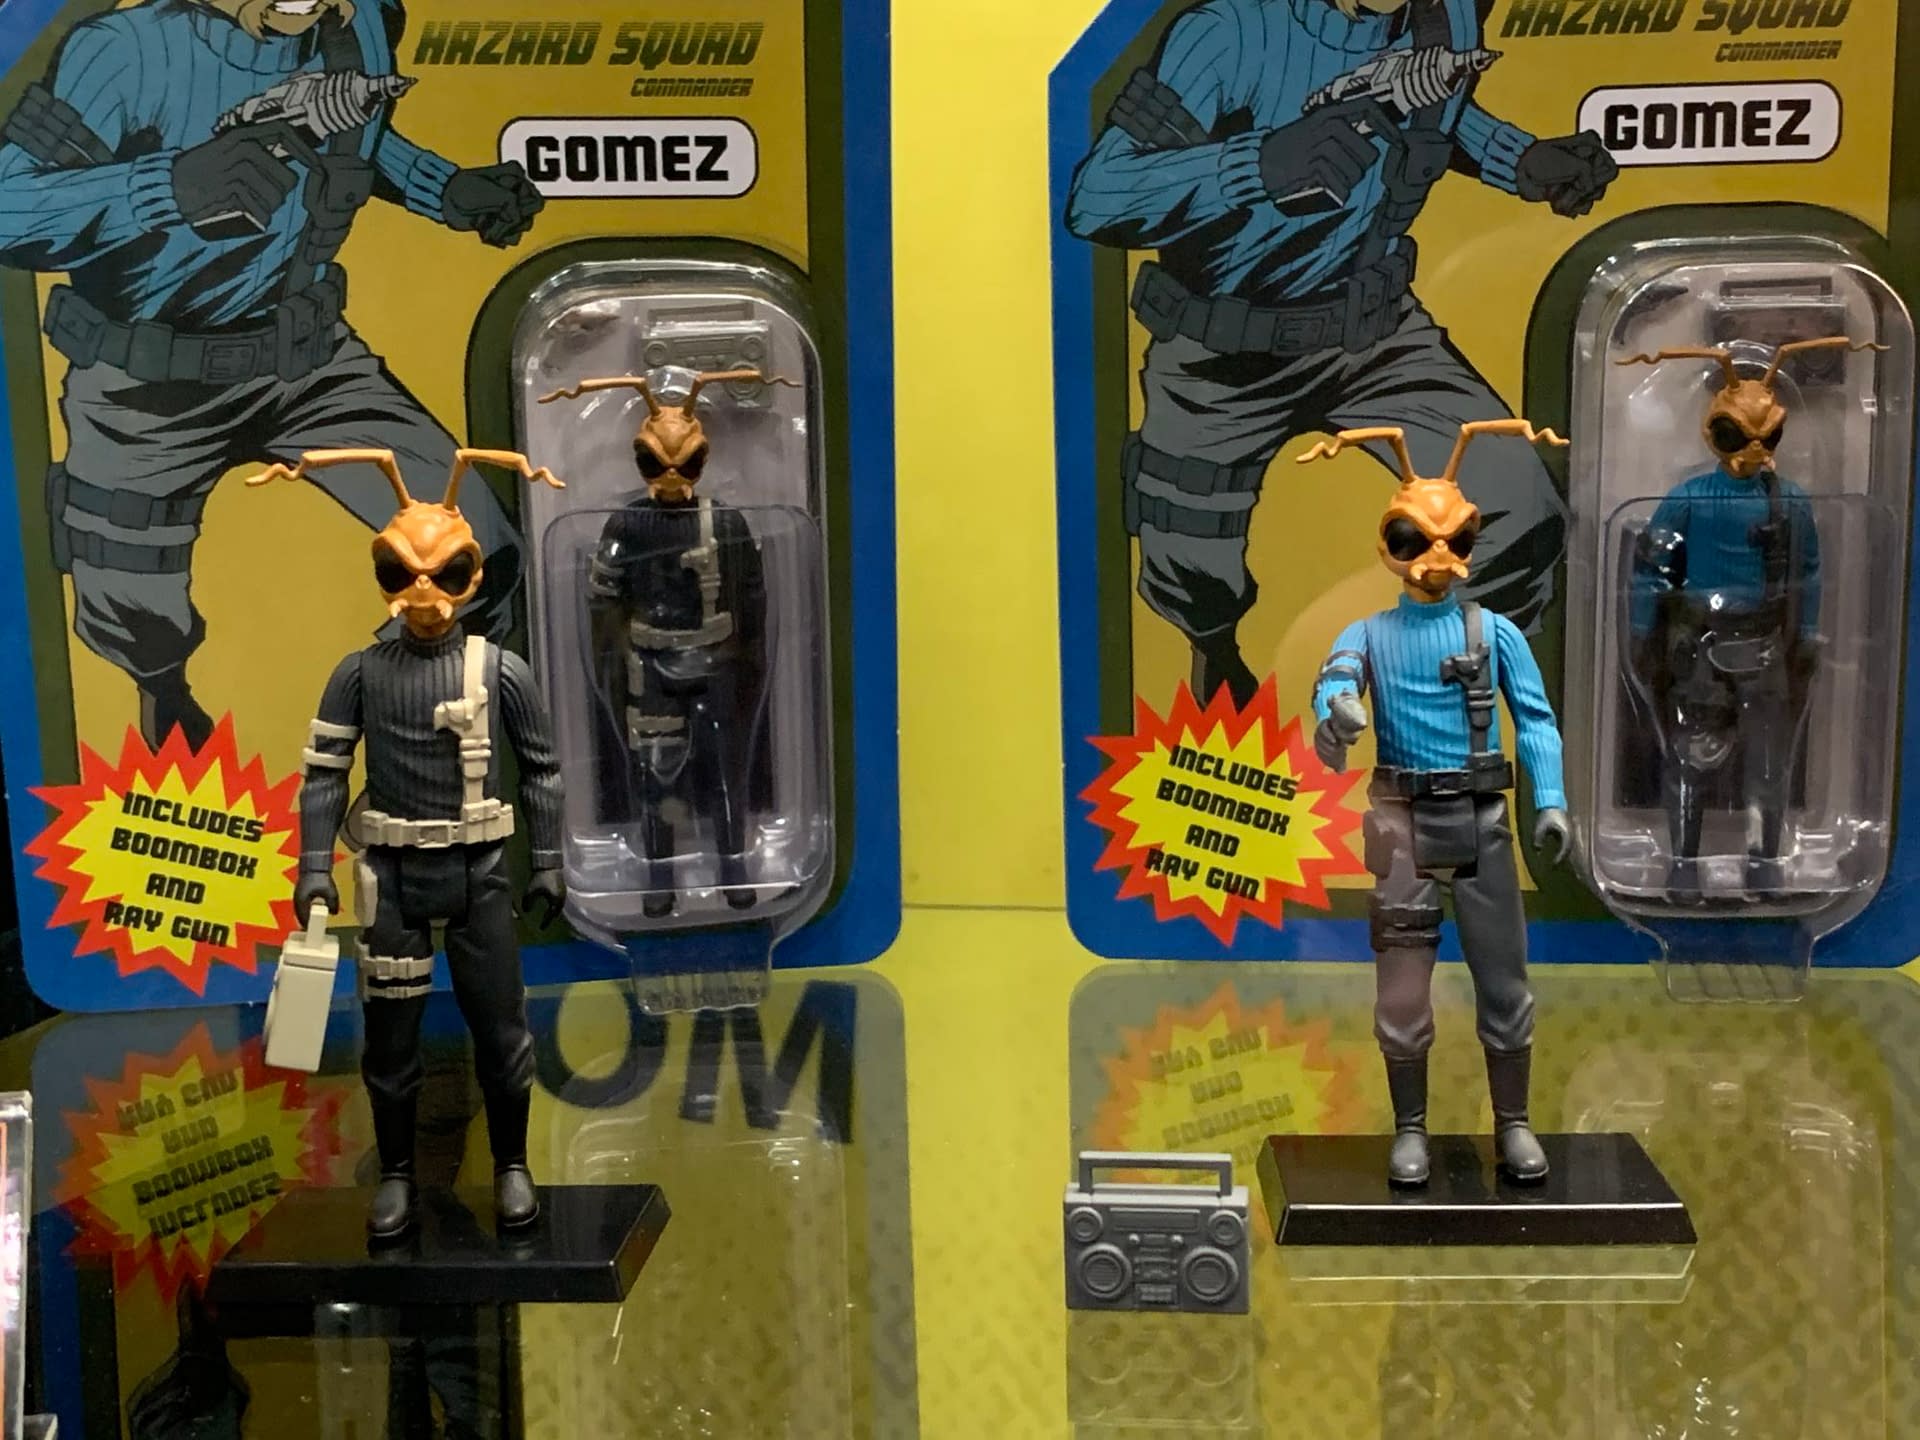 New York Toy Fair: 76 Photos From the Mezco Toyz Booth